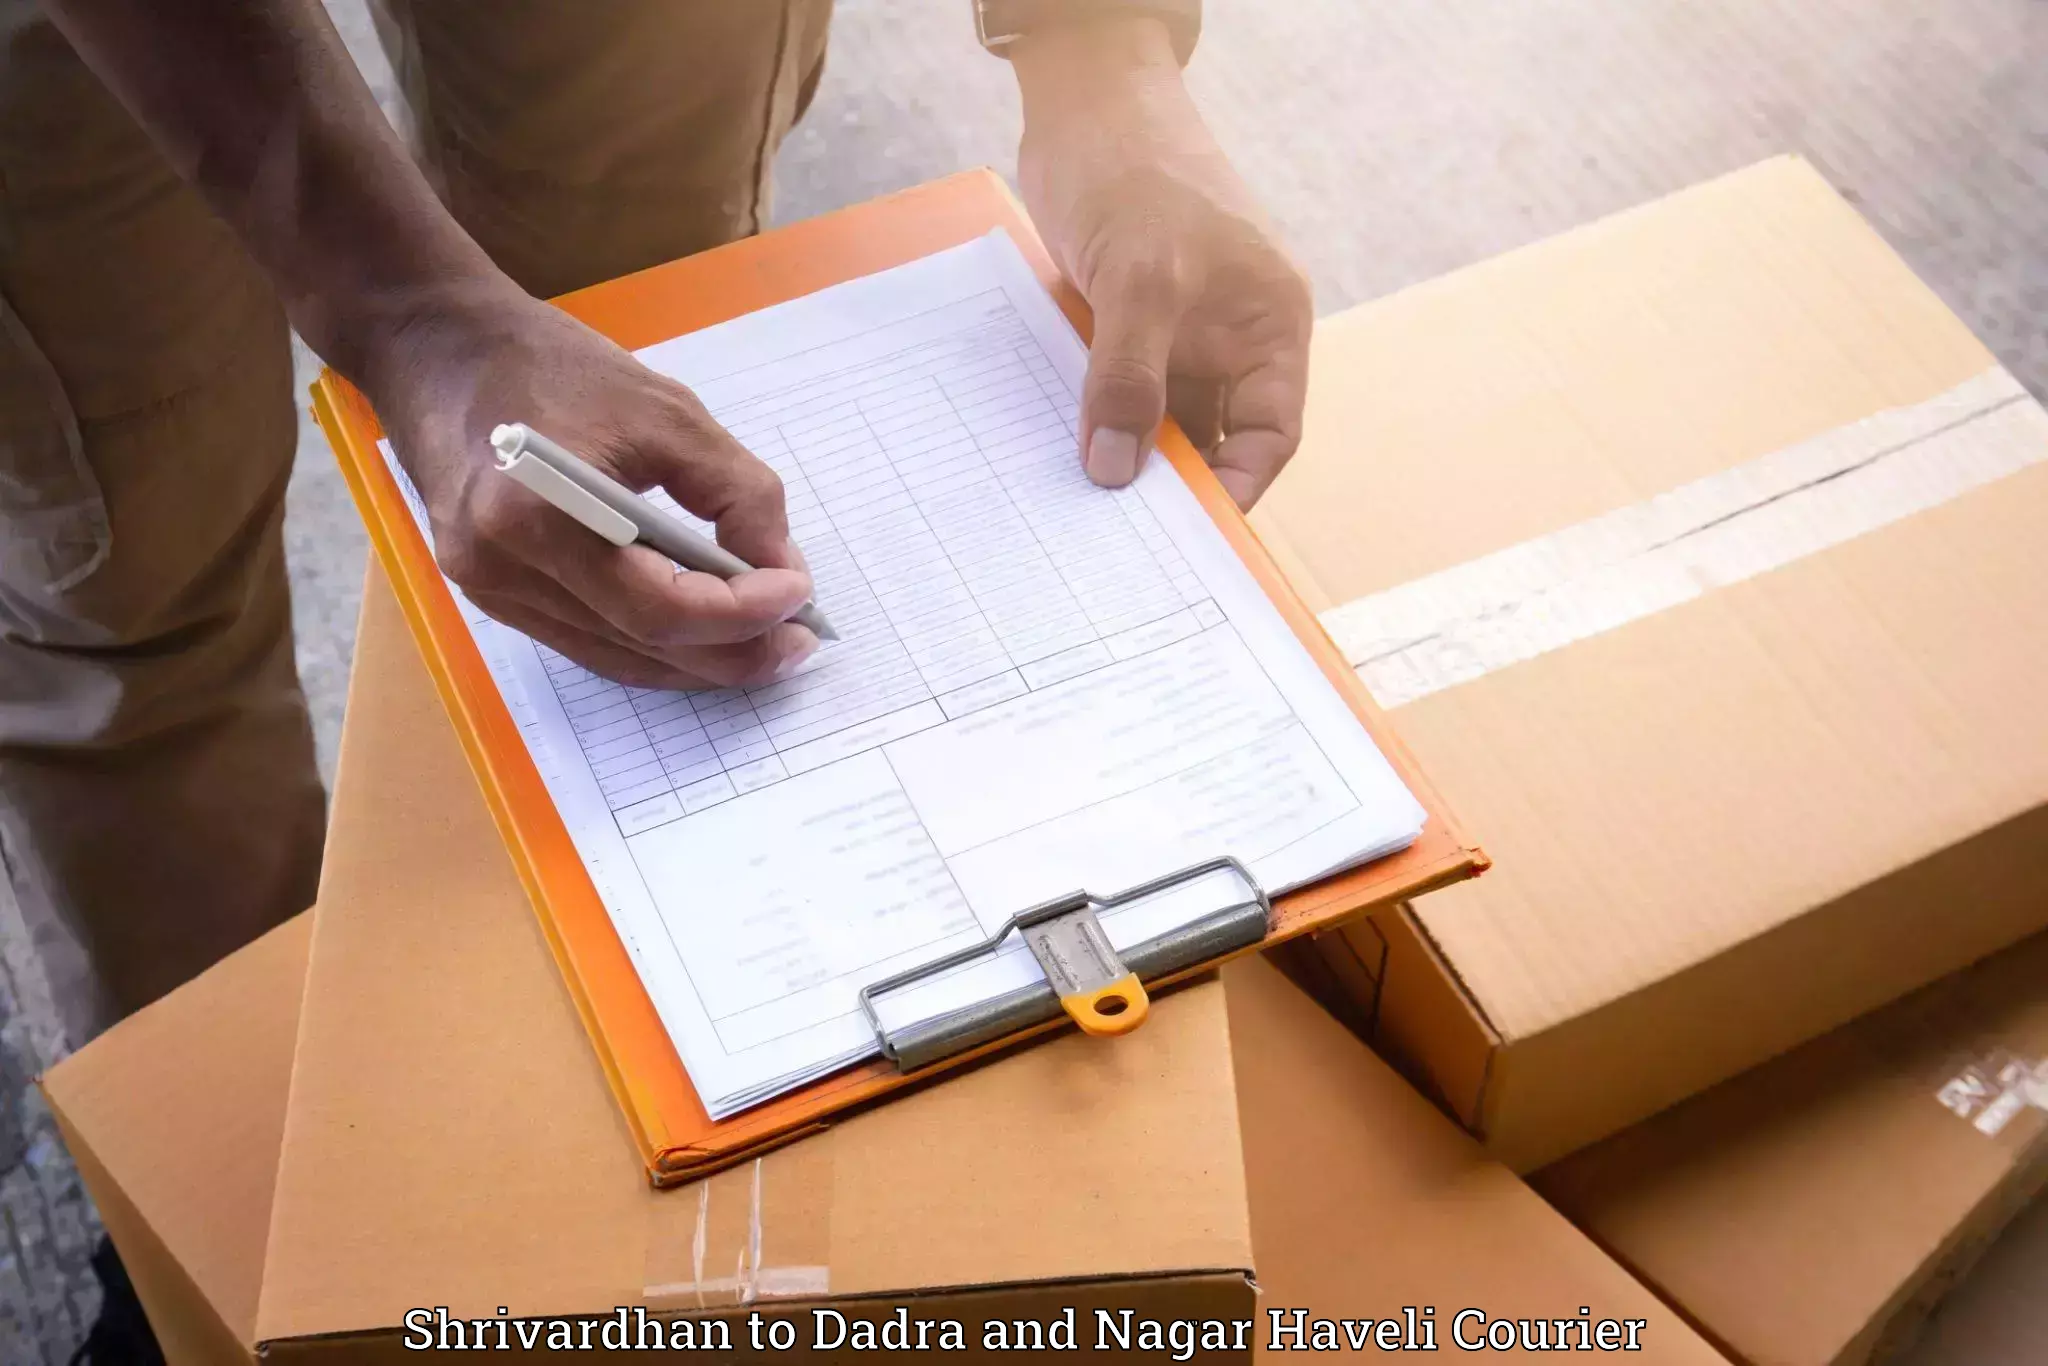 Furniture moving experts Shrivardhan to Dadra and Nagar Haveli